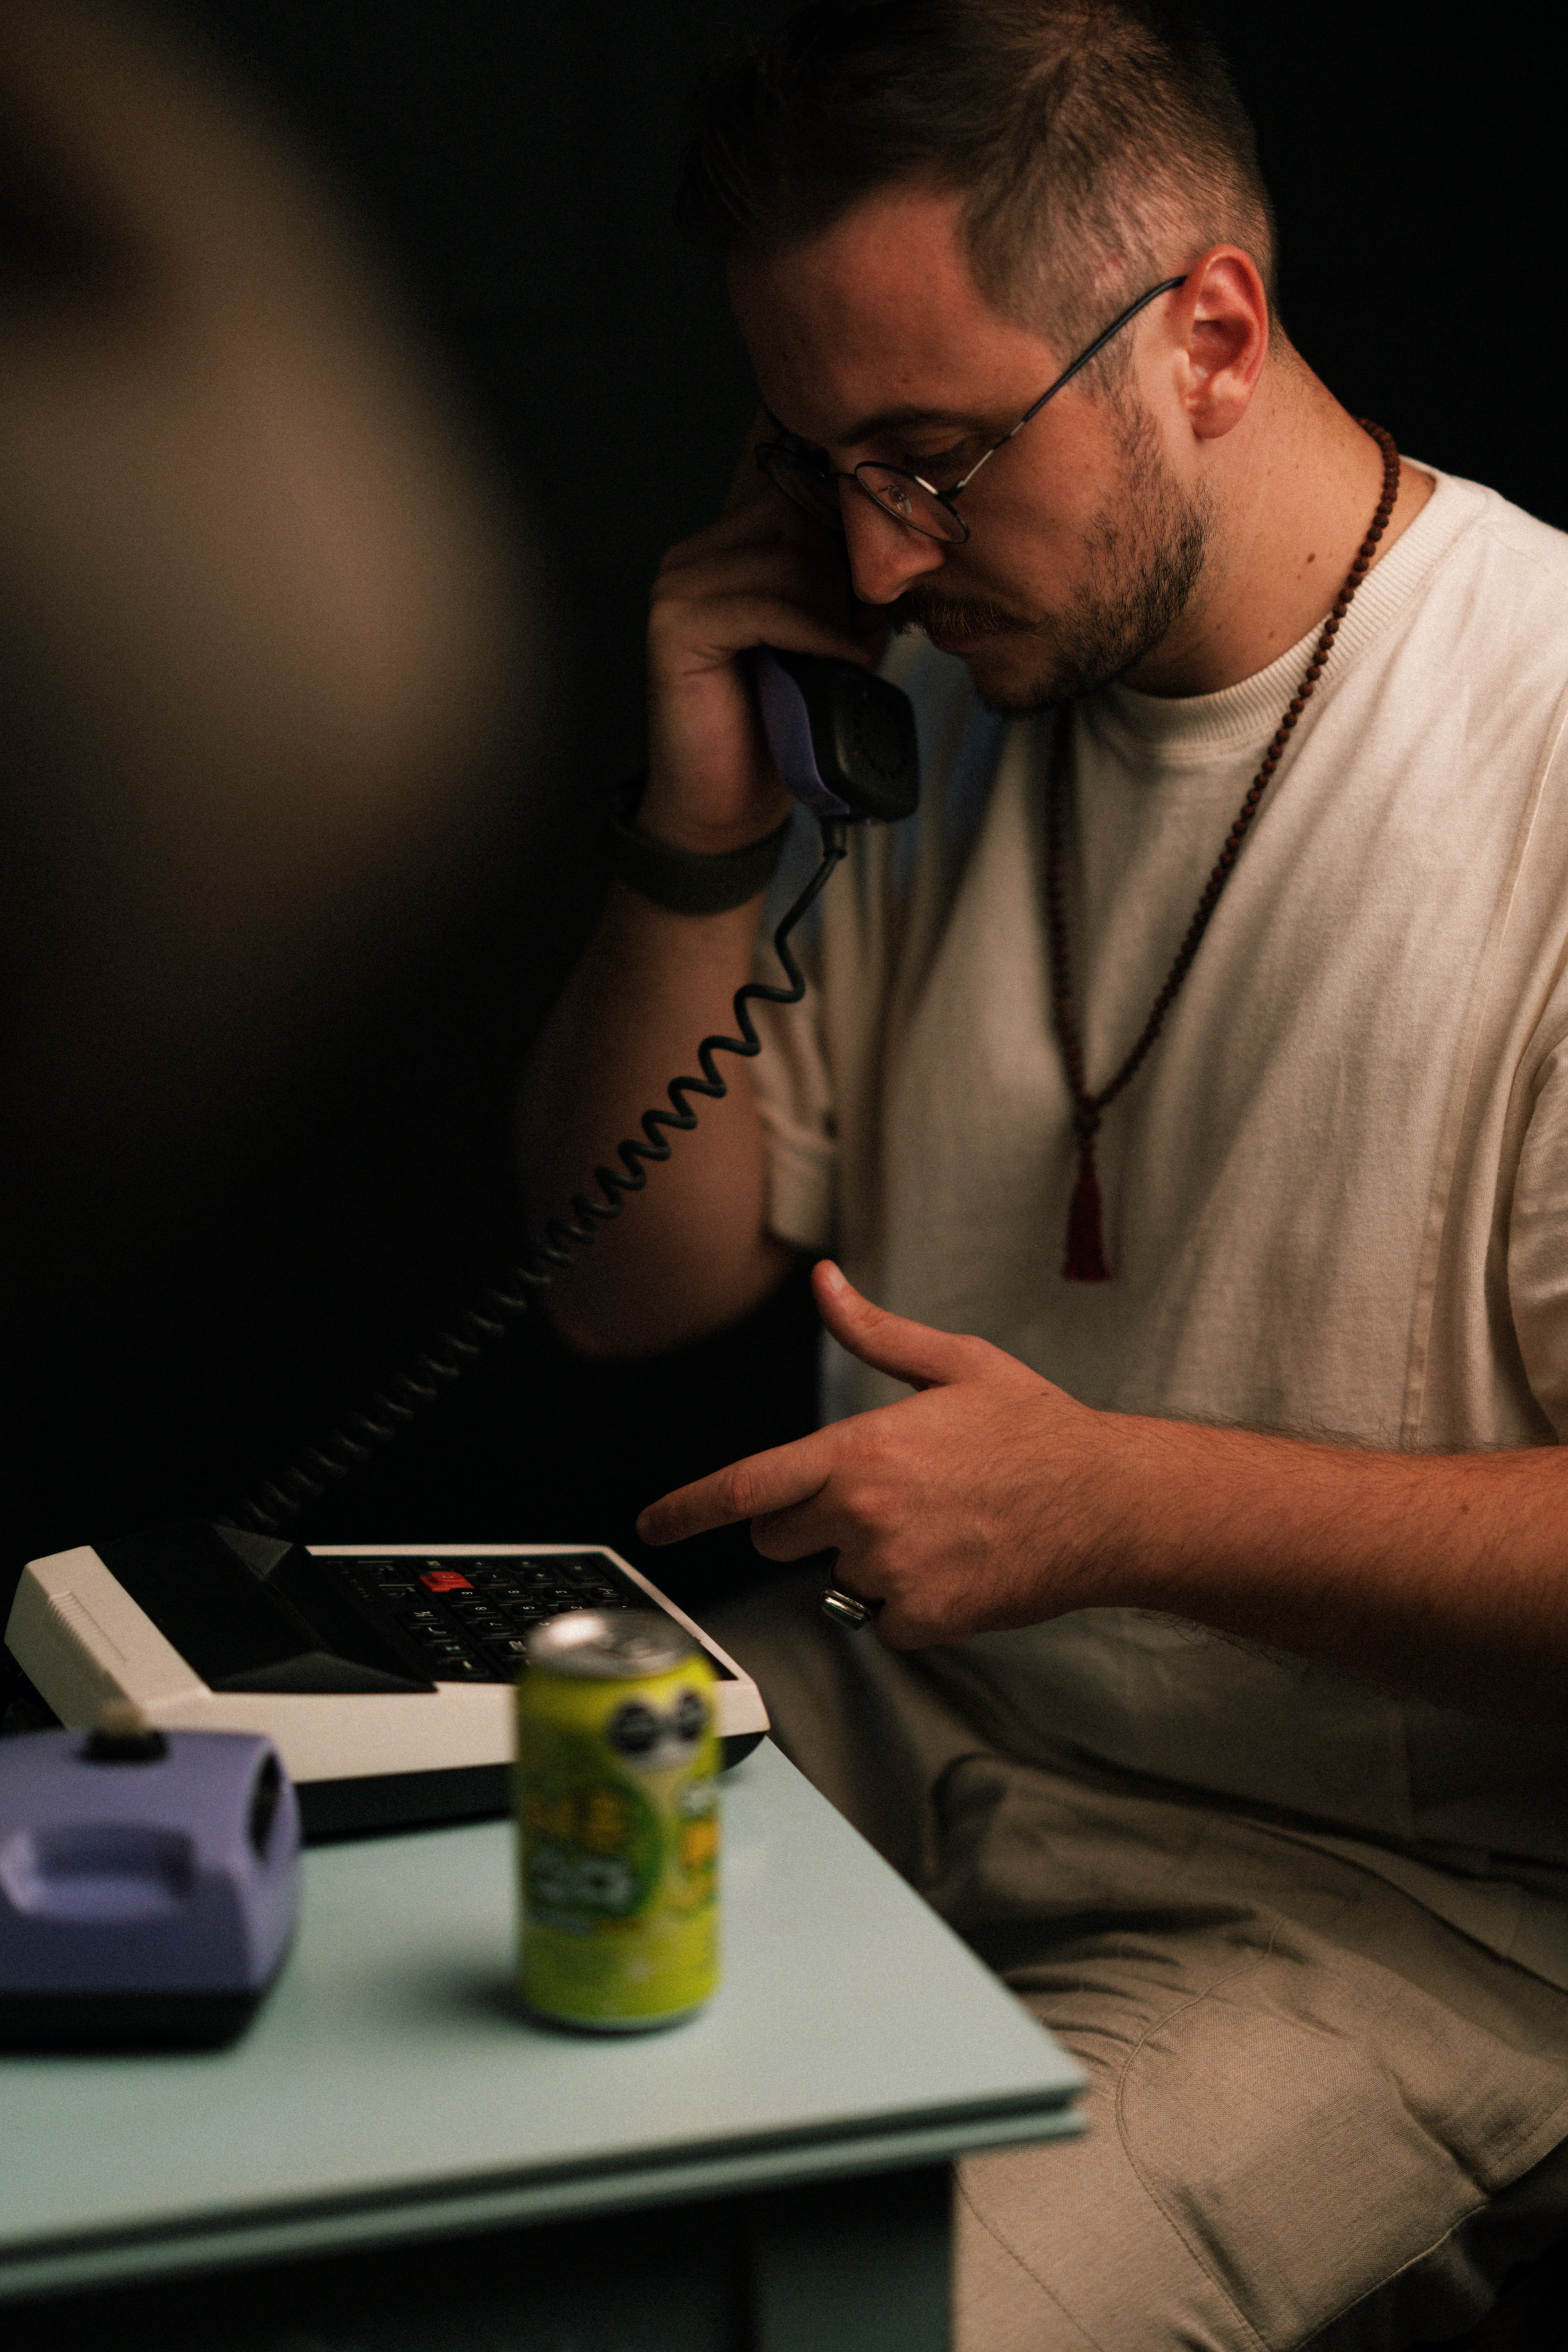 A man talking on a phone | Source: Pexels